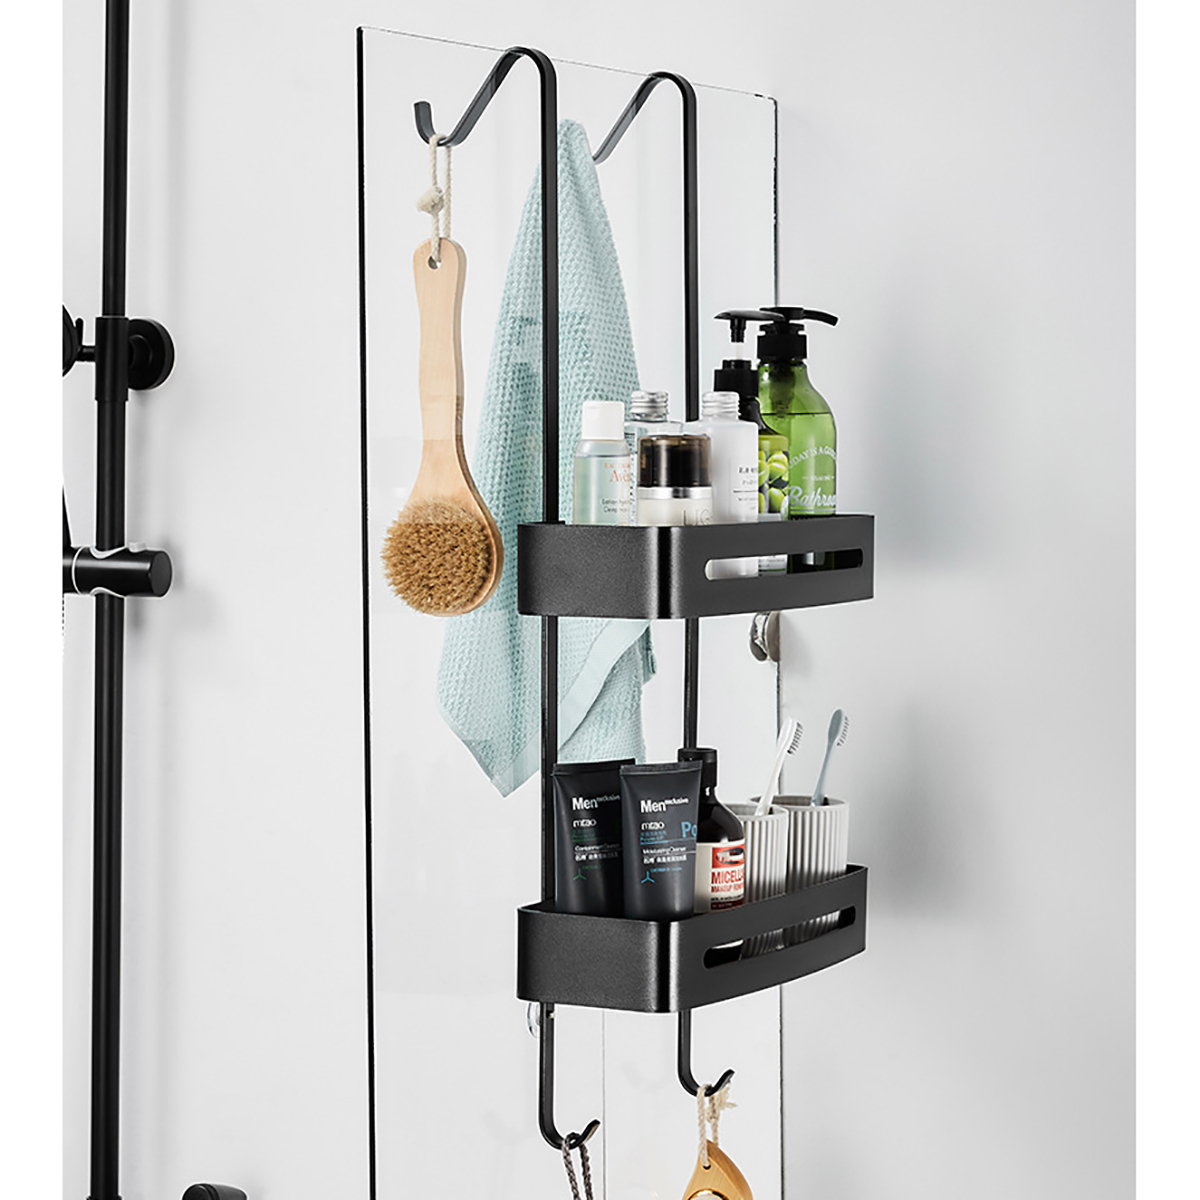 Black-Hanging-Bath-Shelves-Bathroom-Shelf-Organizer-Nail-free-Shampoo-Holder-1730558-7